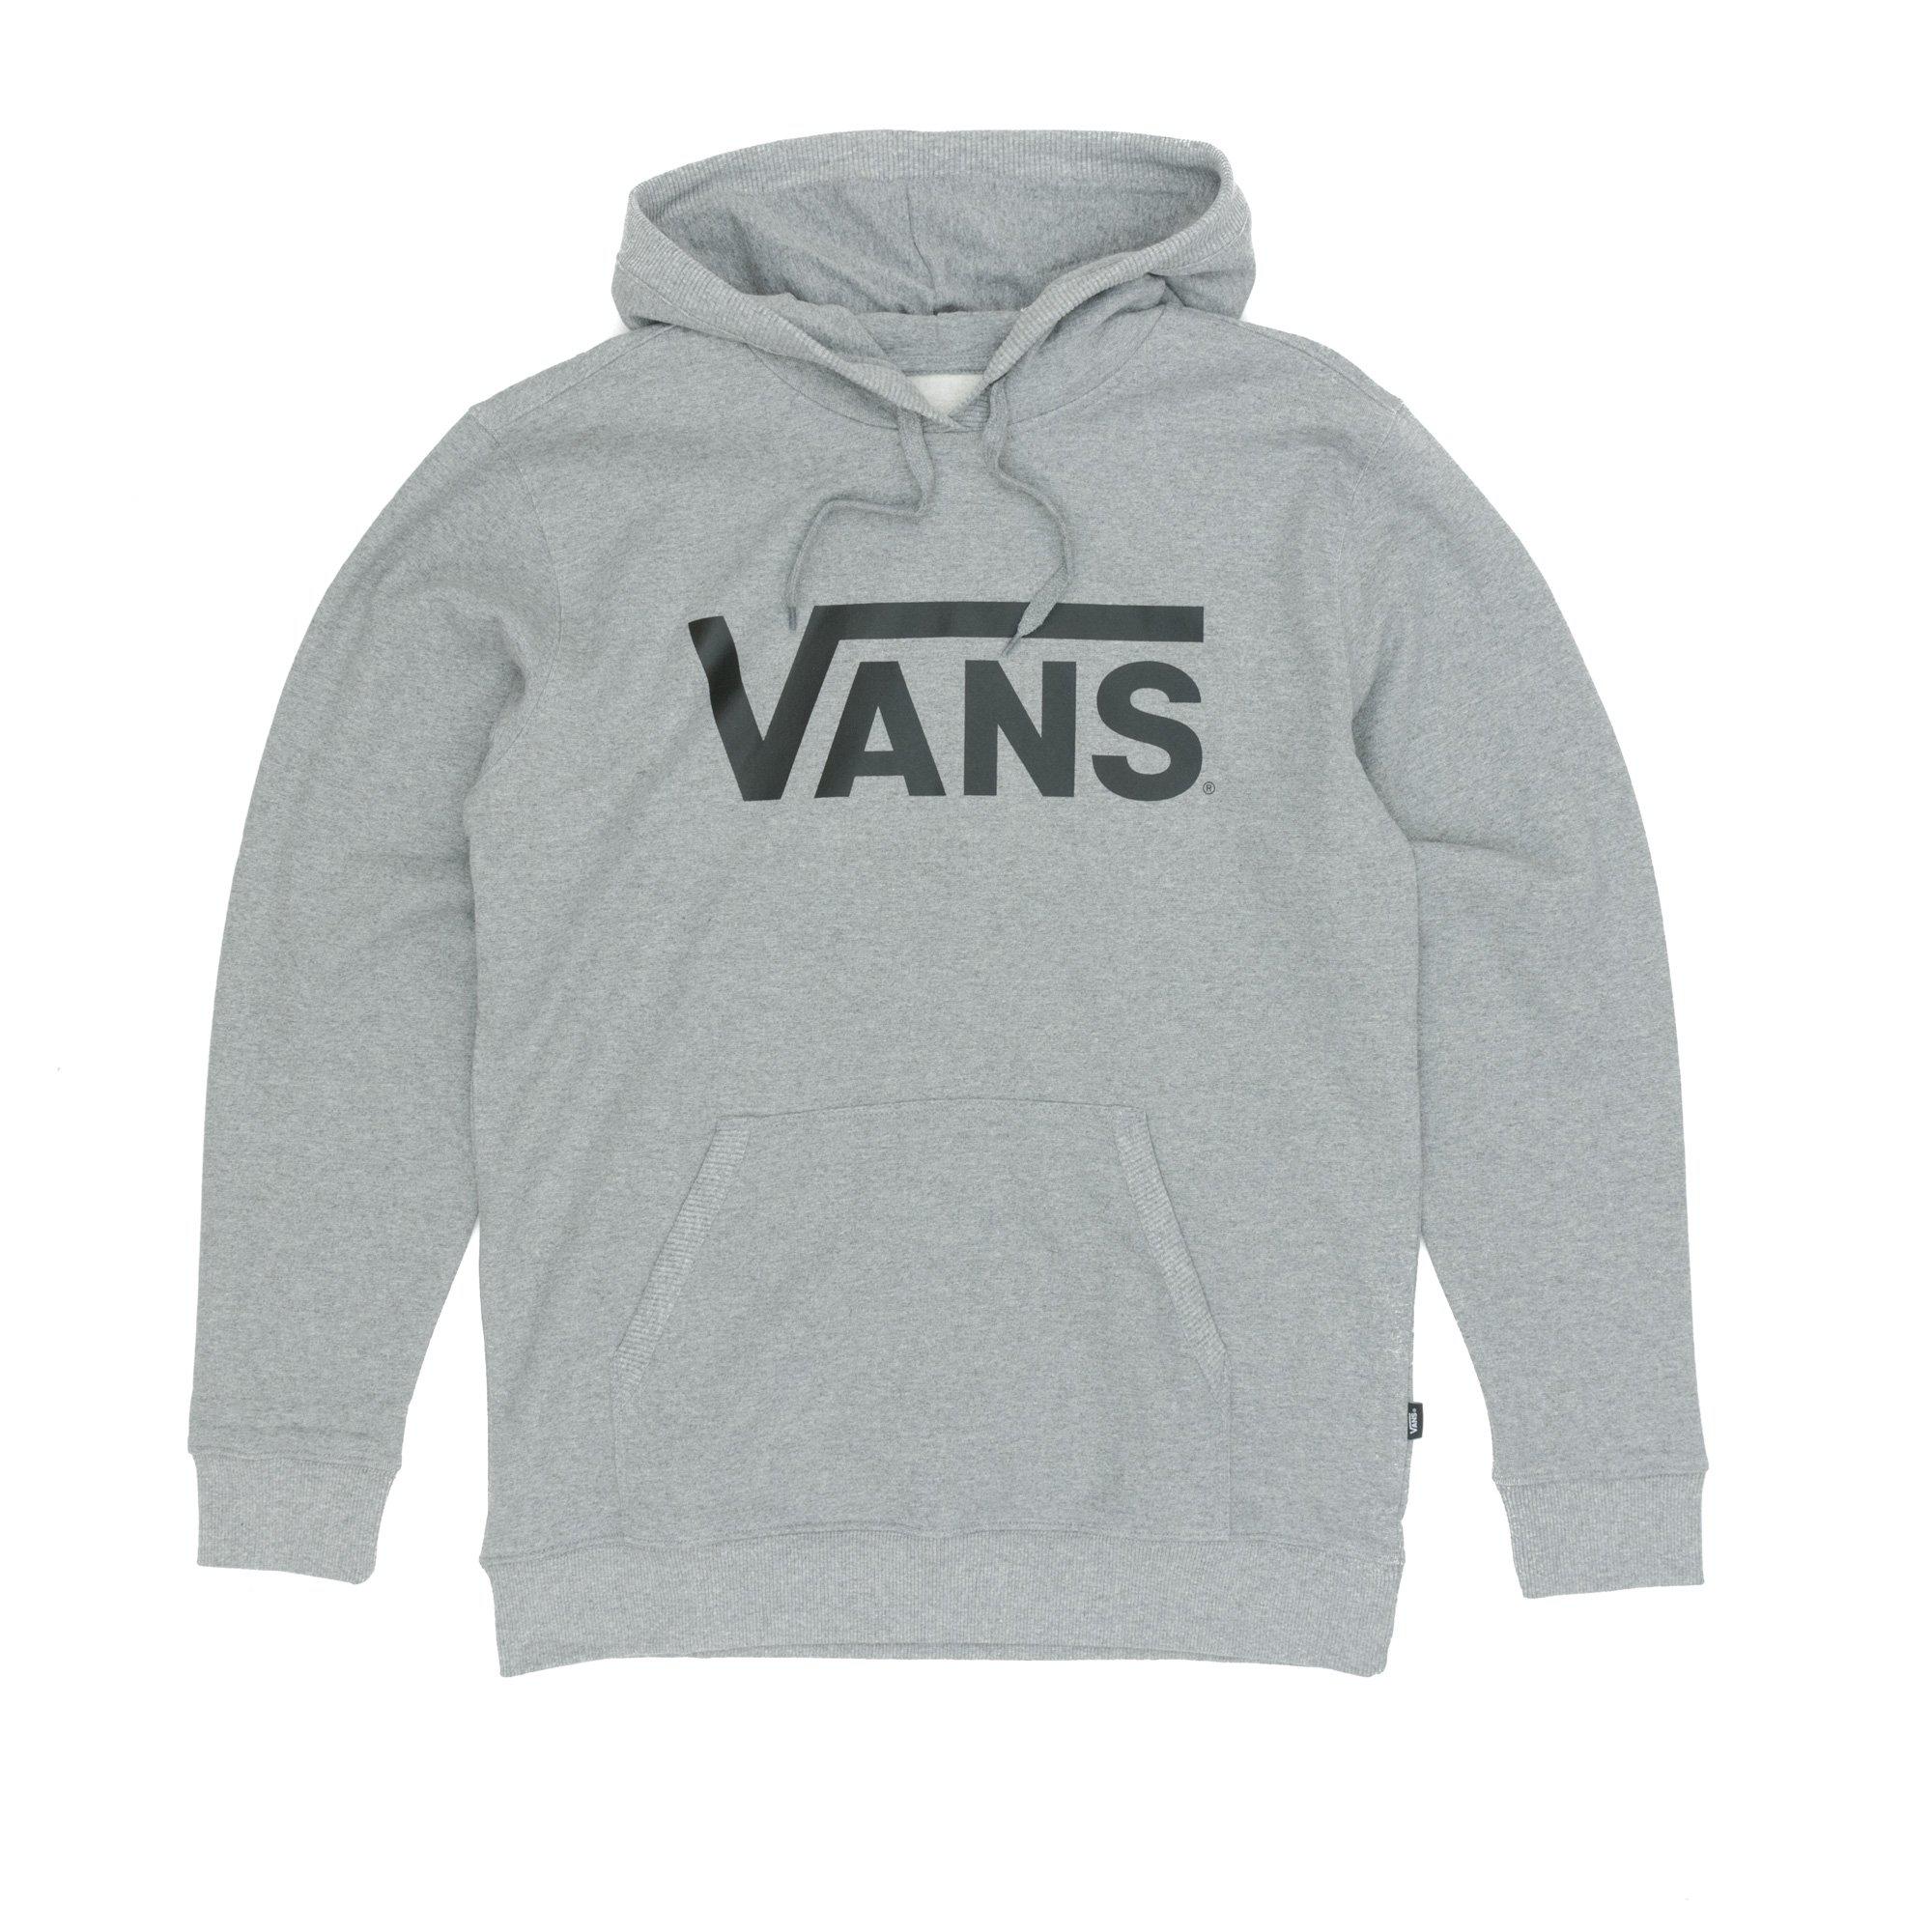 vans grey sweatshirt Cheaper Than 